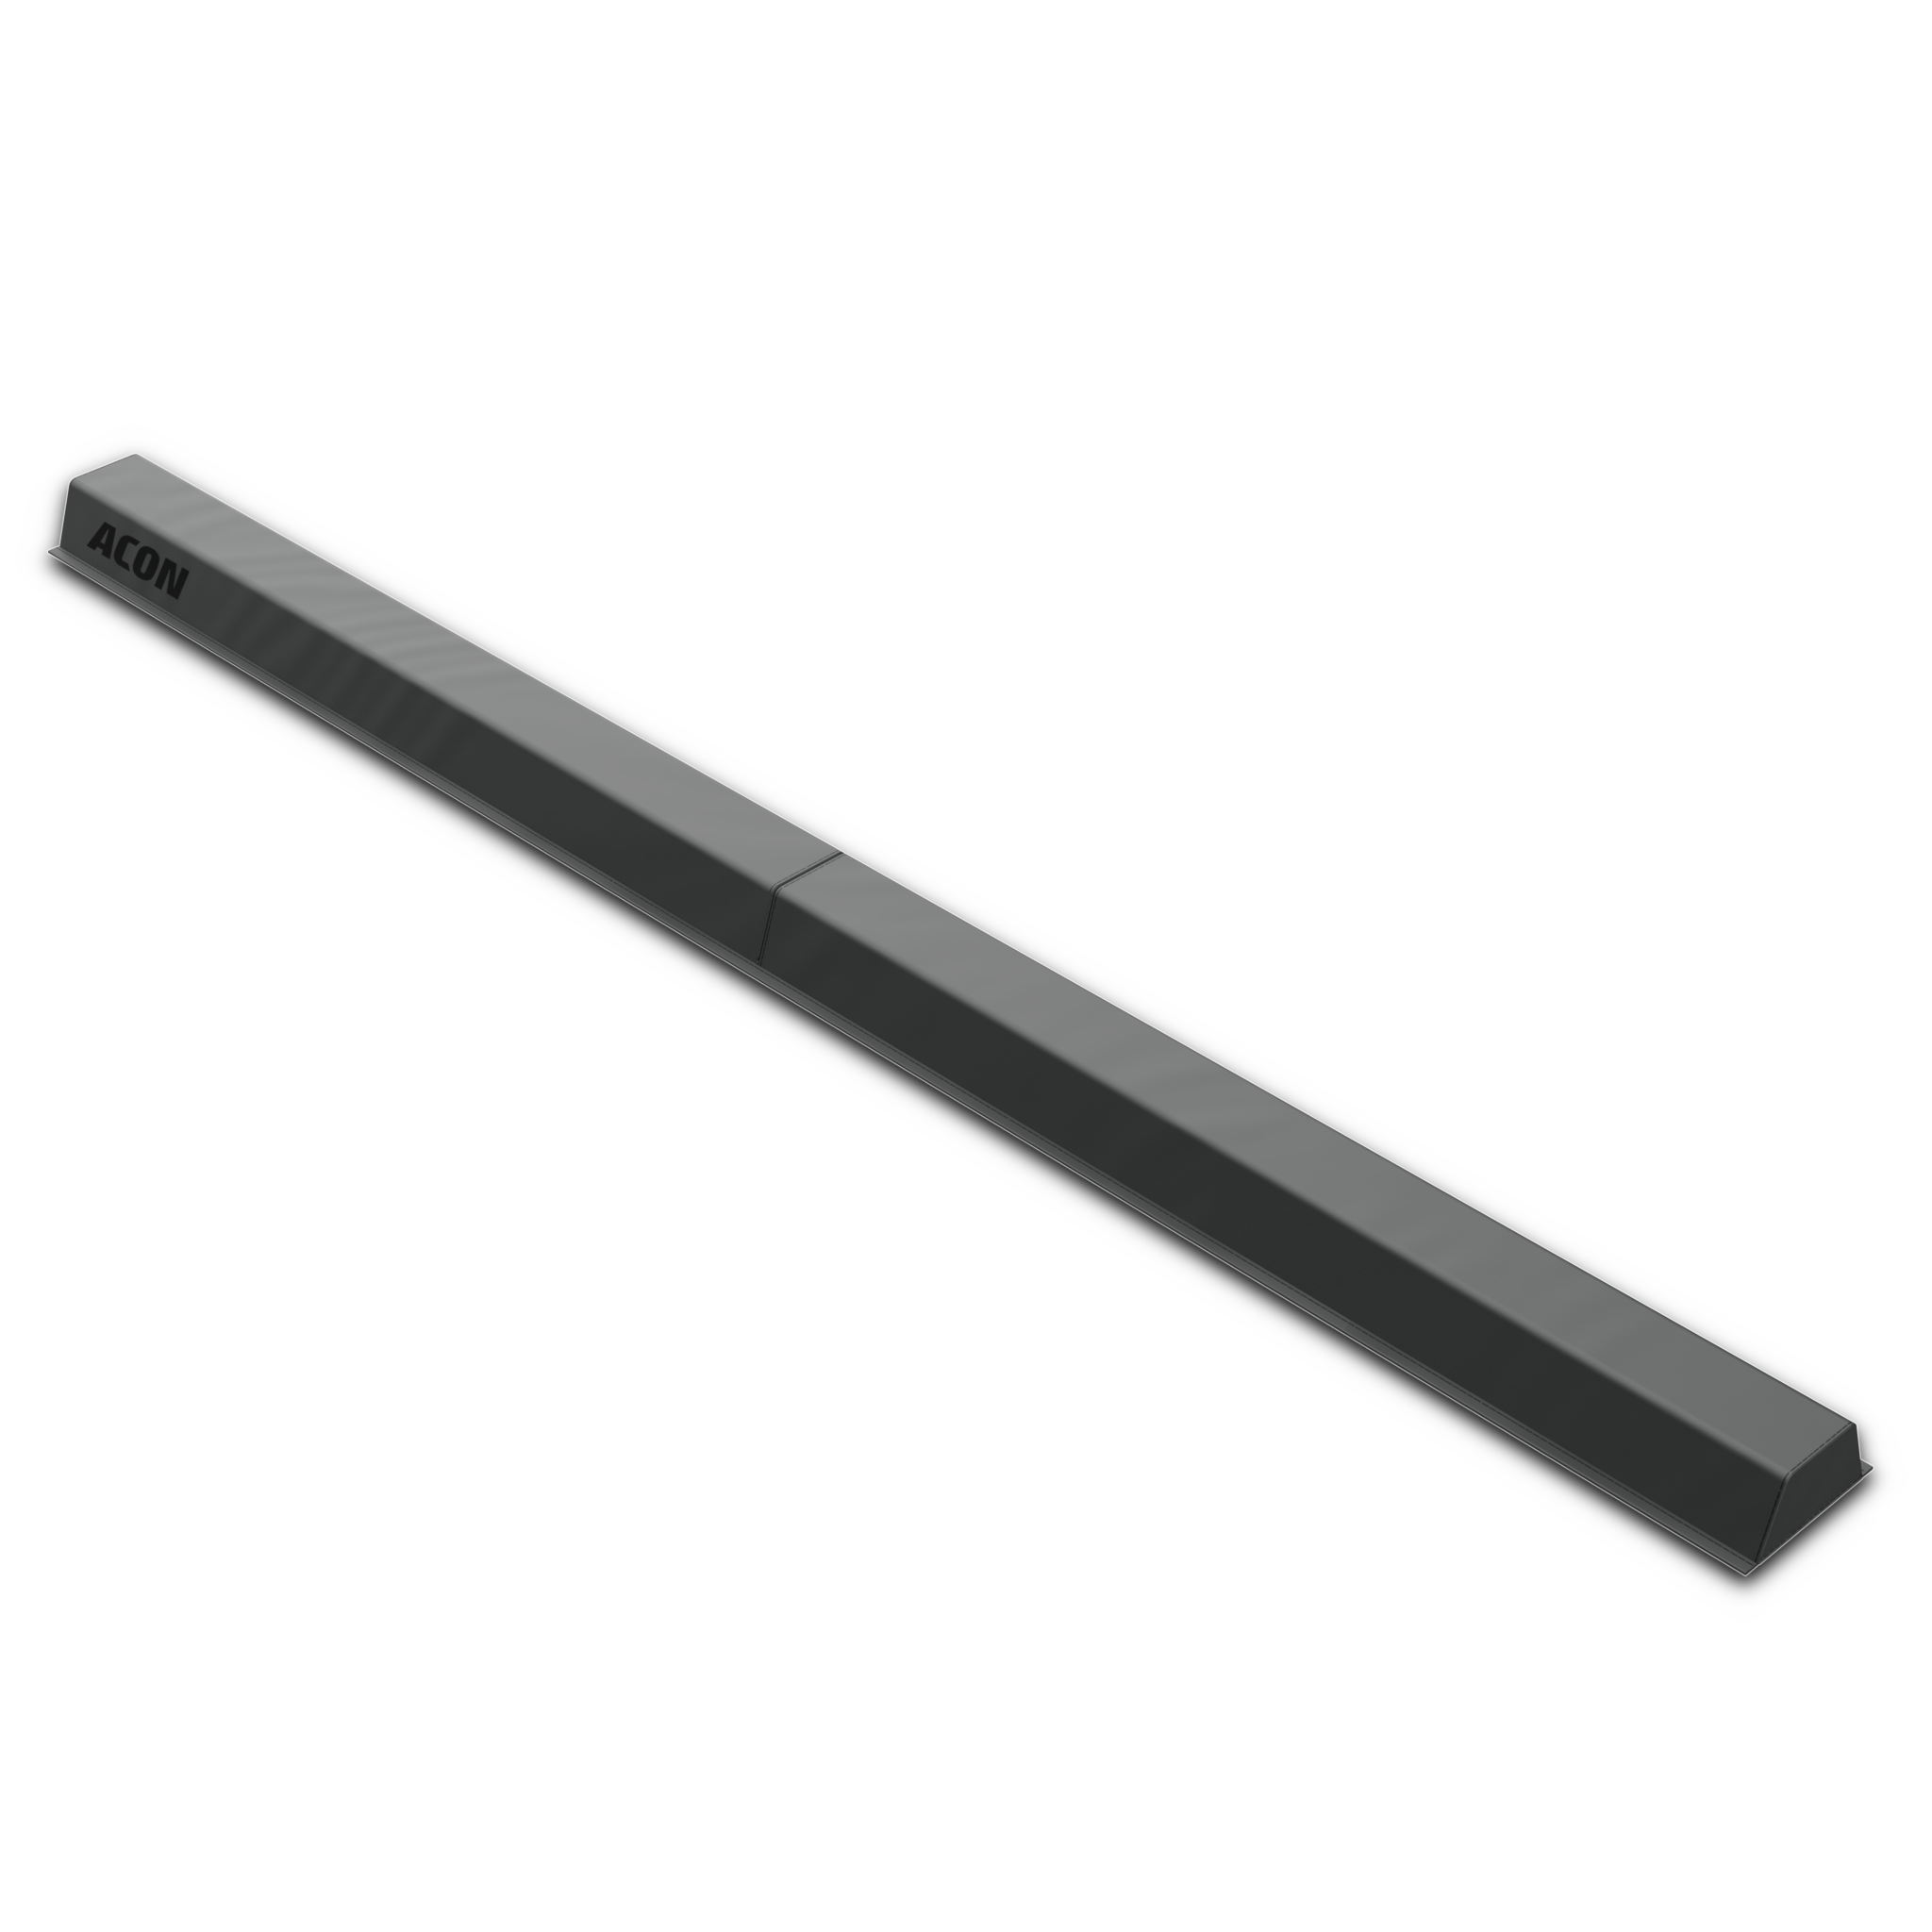 Produktbild av Acons balansbom Black Edition mot vit bakgrund.